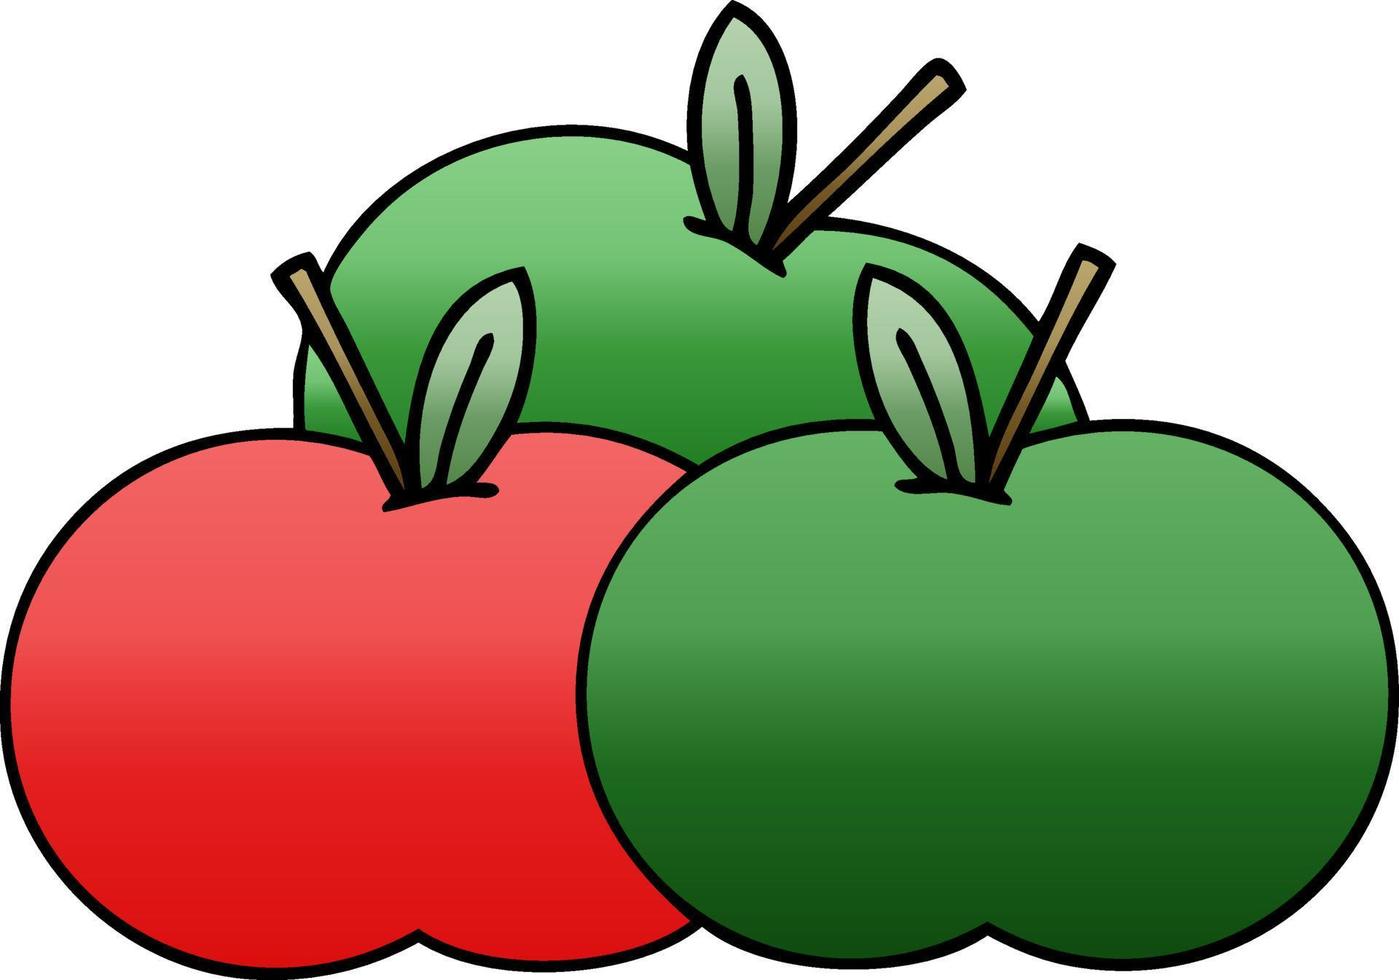 gradient shaded cartoon apples vector